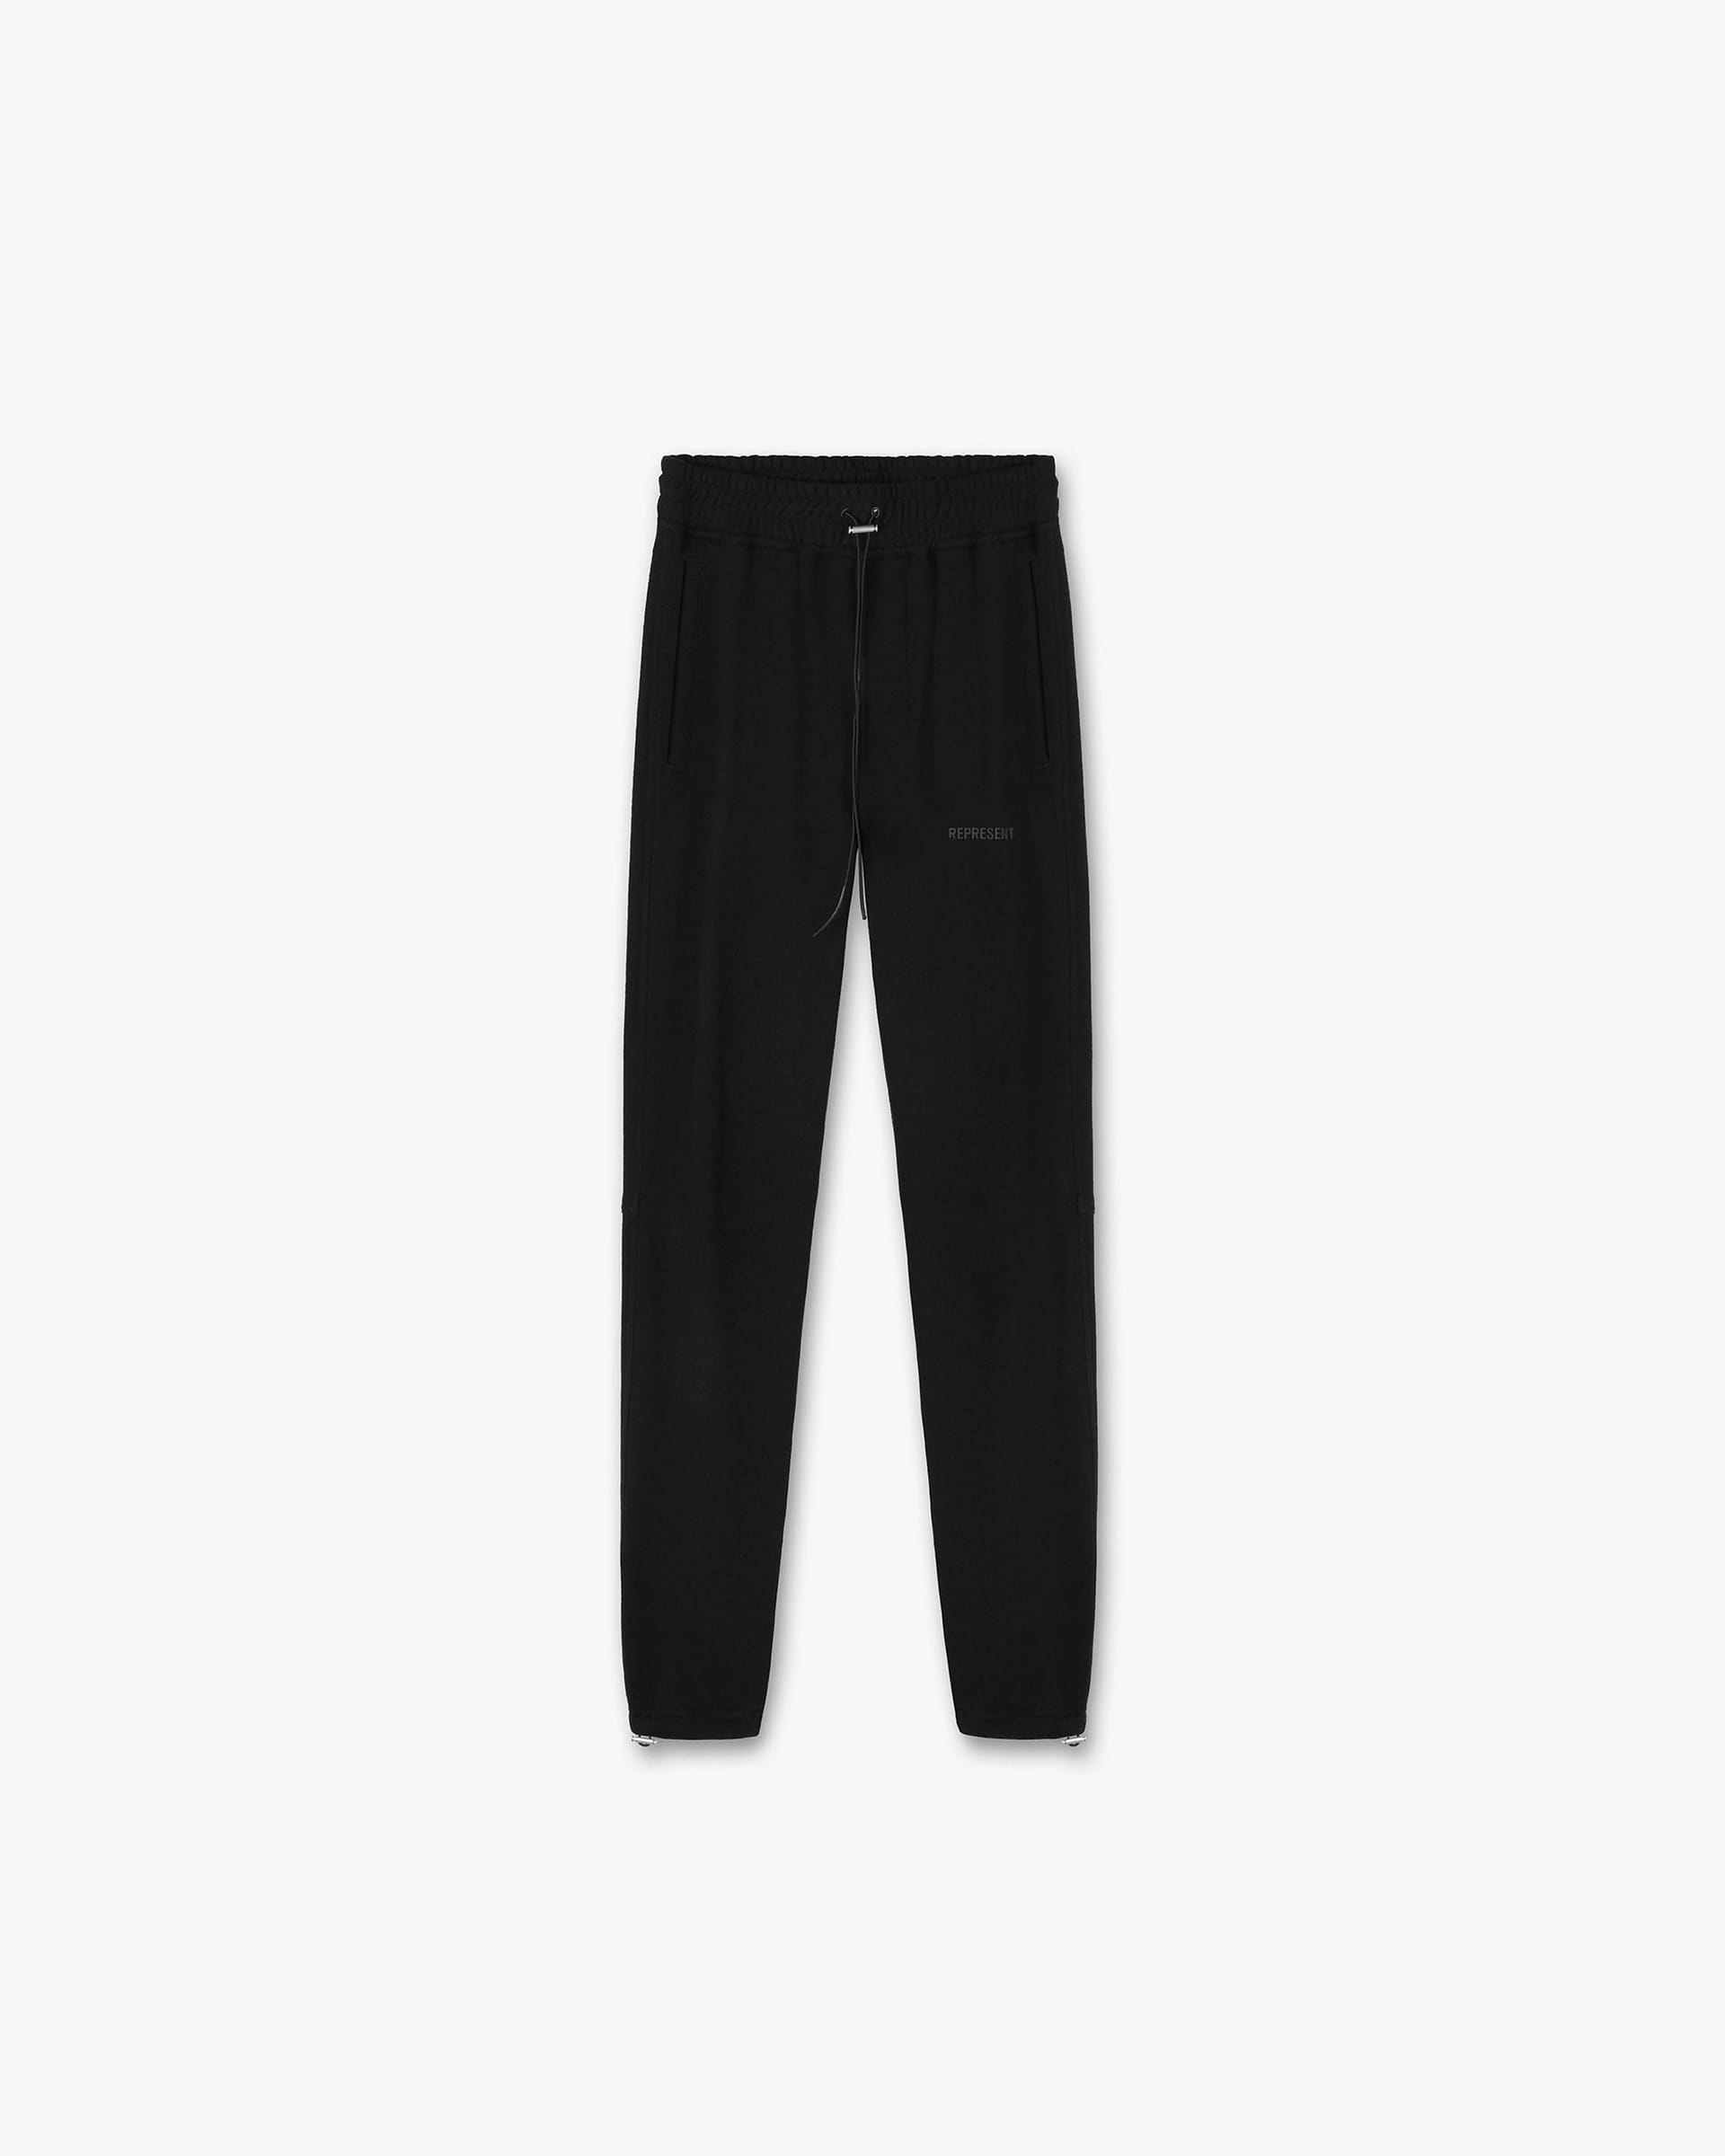 Blank Sweatpant | All Black Pants BLANKS | Represent Clo